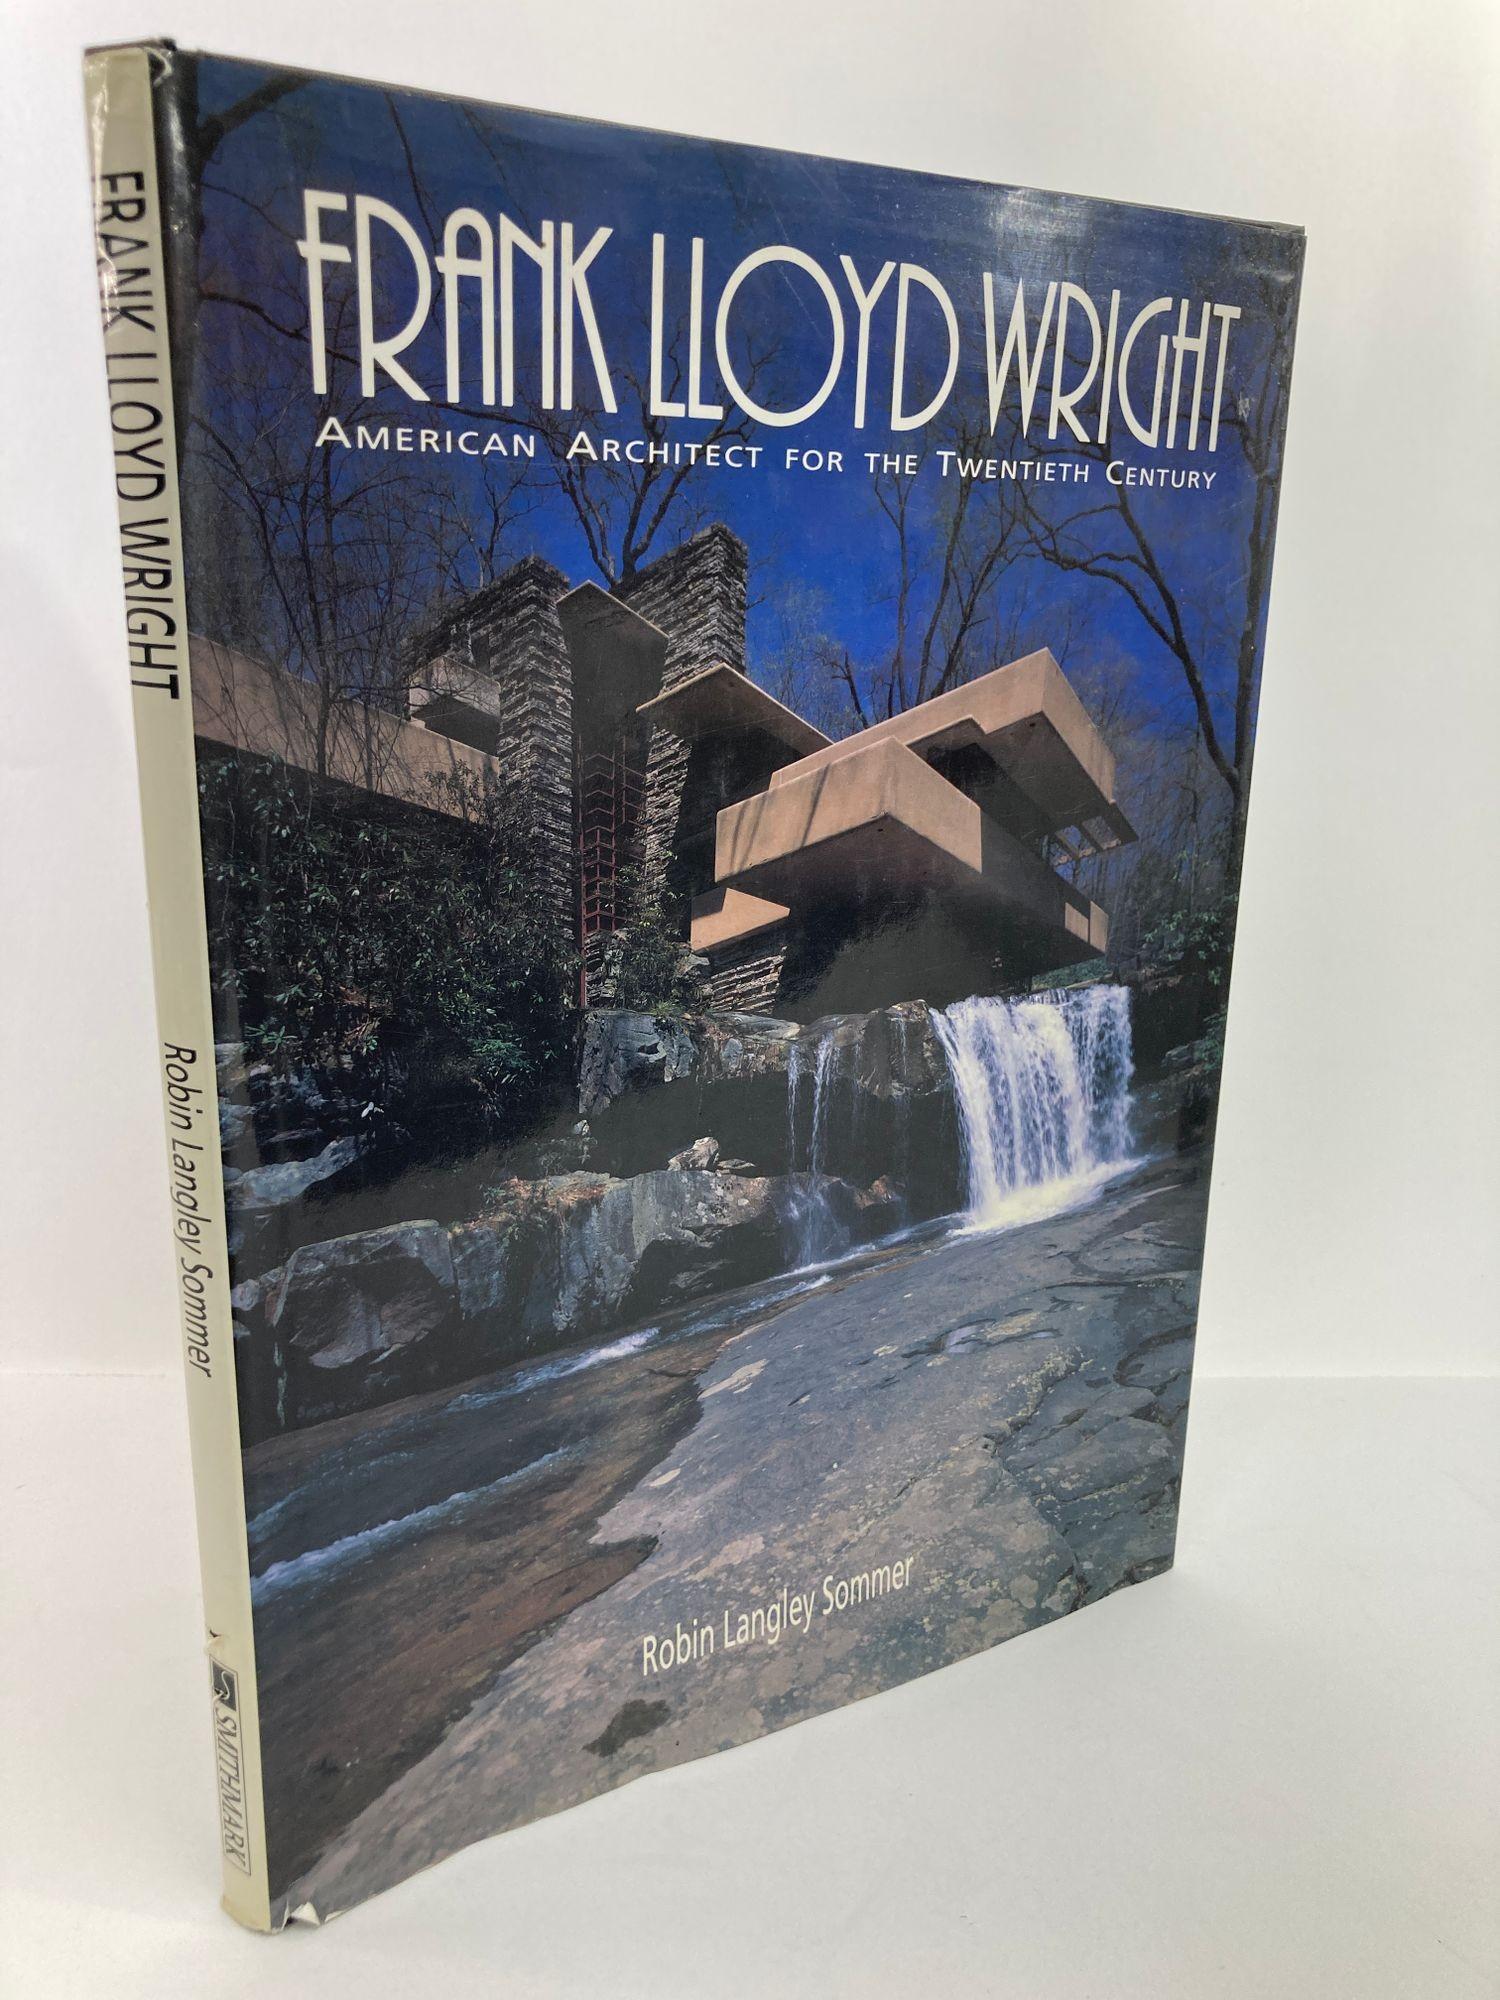 Frank Lloyd Wright American Architect of the Twentieth century 1993.
by Robin Langley Sommer.
1st Edition, hardcover book.


Frank Lloyd Wright: American Architect for the Twentieth Century Hardcover book.
Frank Lloyd Wright is recognized as a